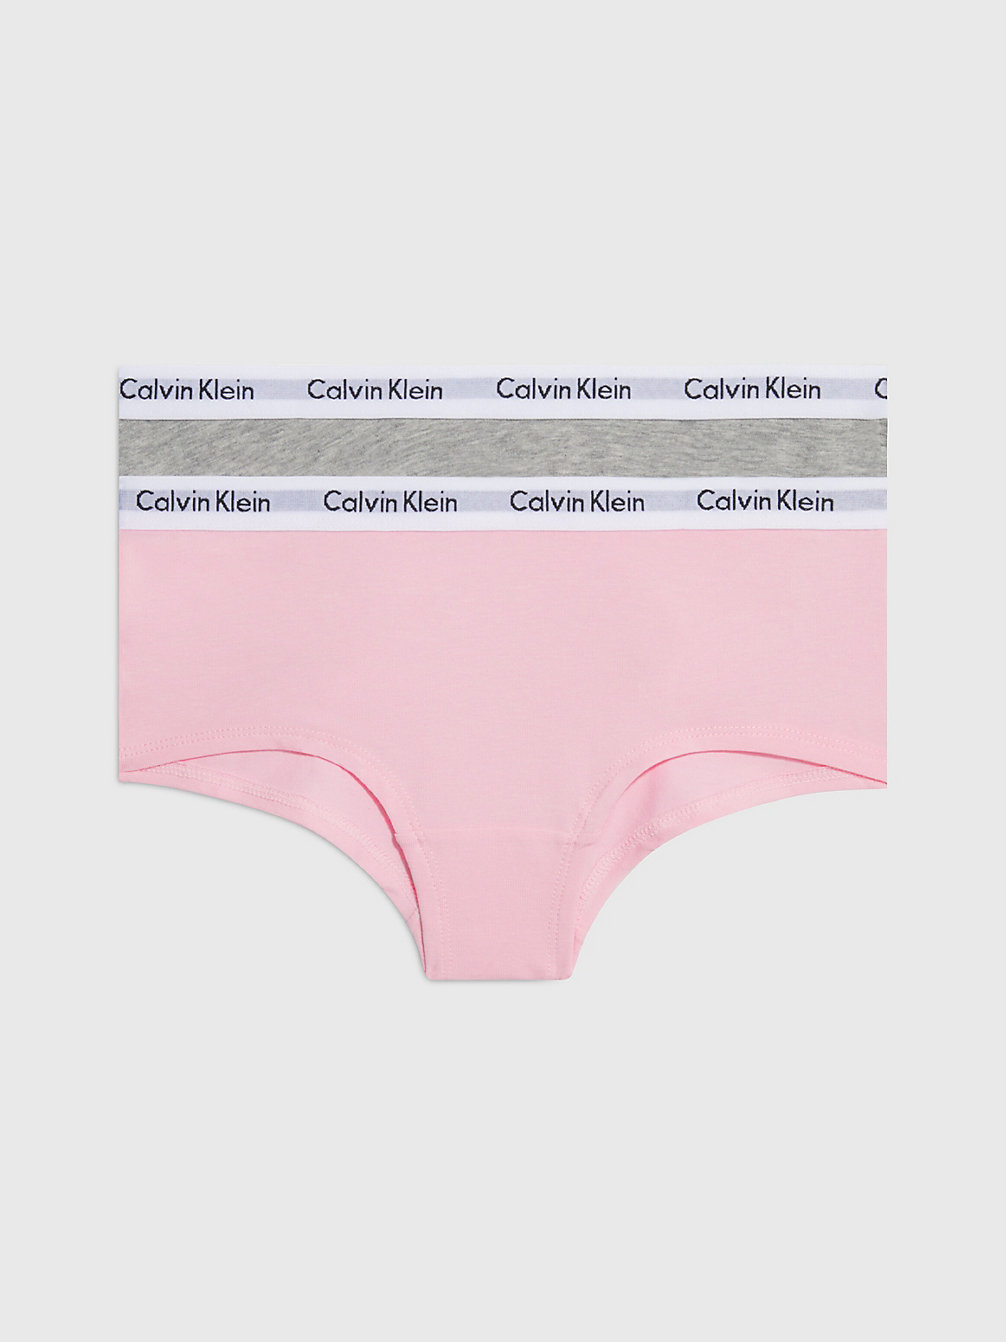 GREY HTR/UNIQUE > Комплект трусиков-шортов для девочек 2 шт. - Modern Cott > undefined girls - Calvin Klein